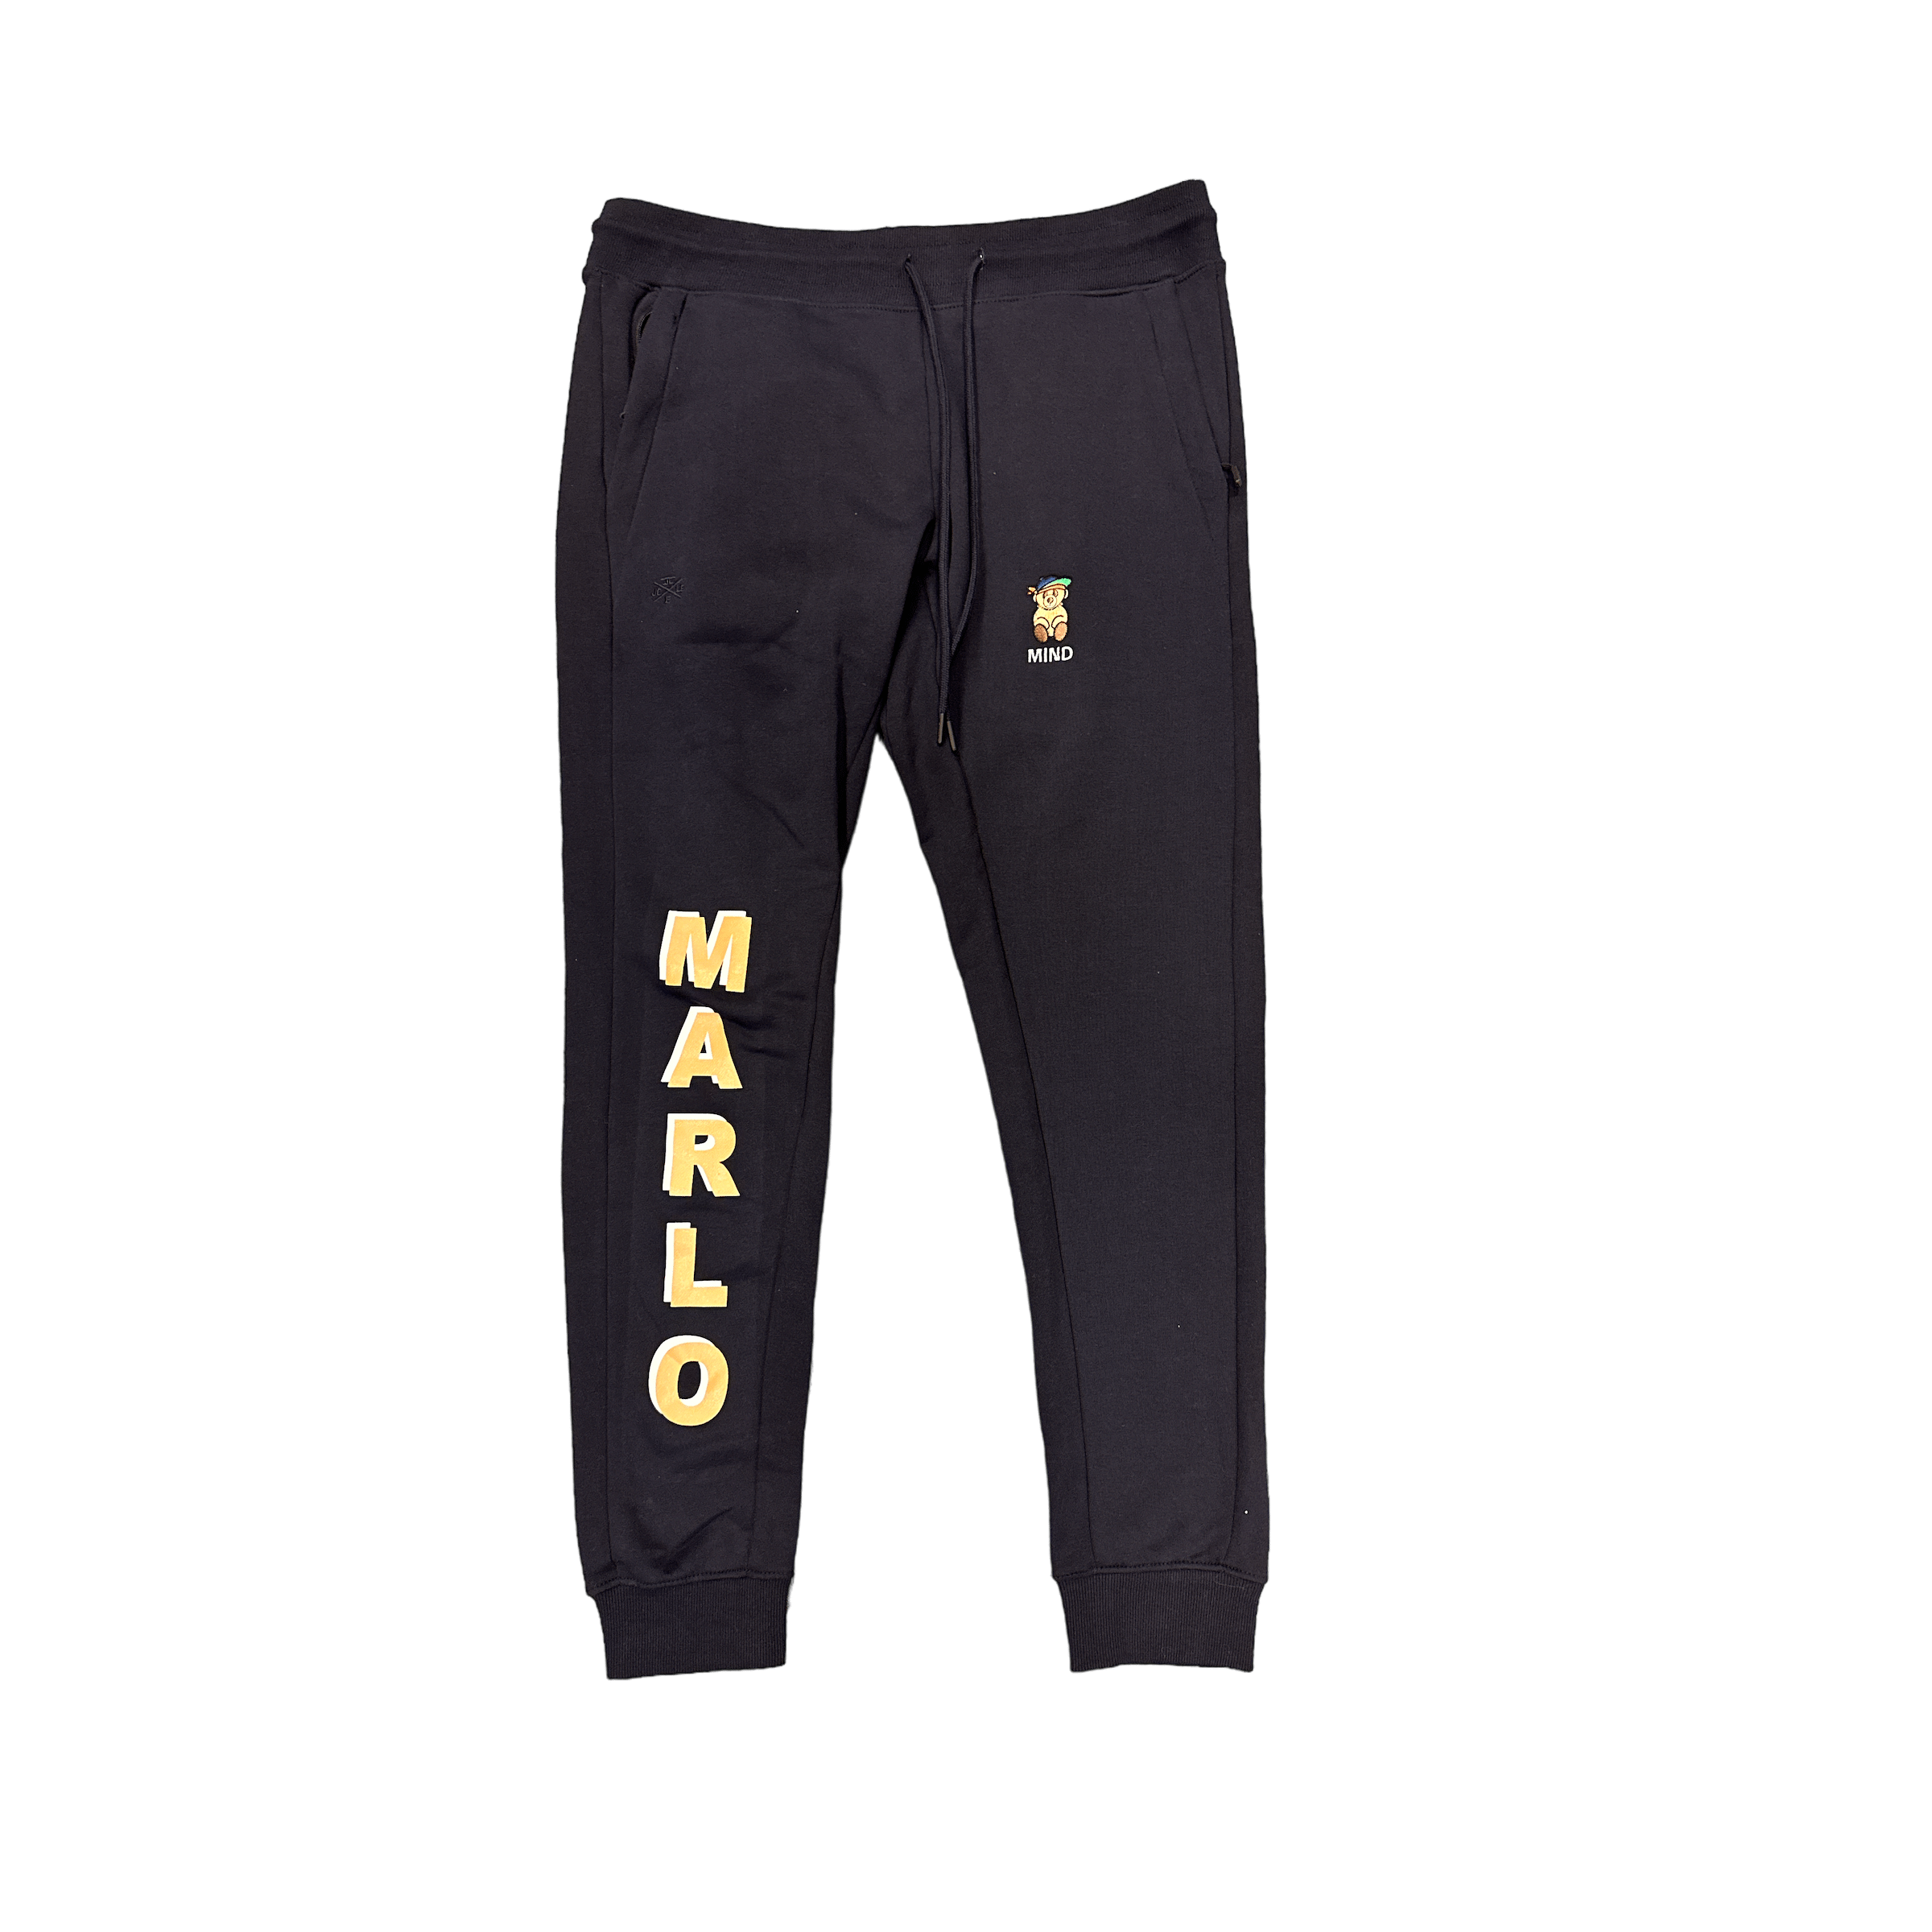 Mastermind315 Marlo navy sweatpants